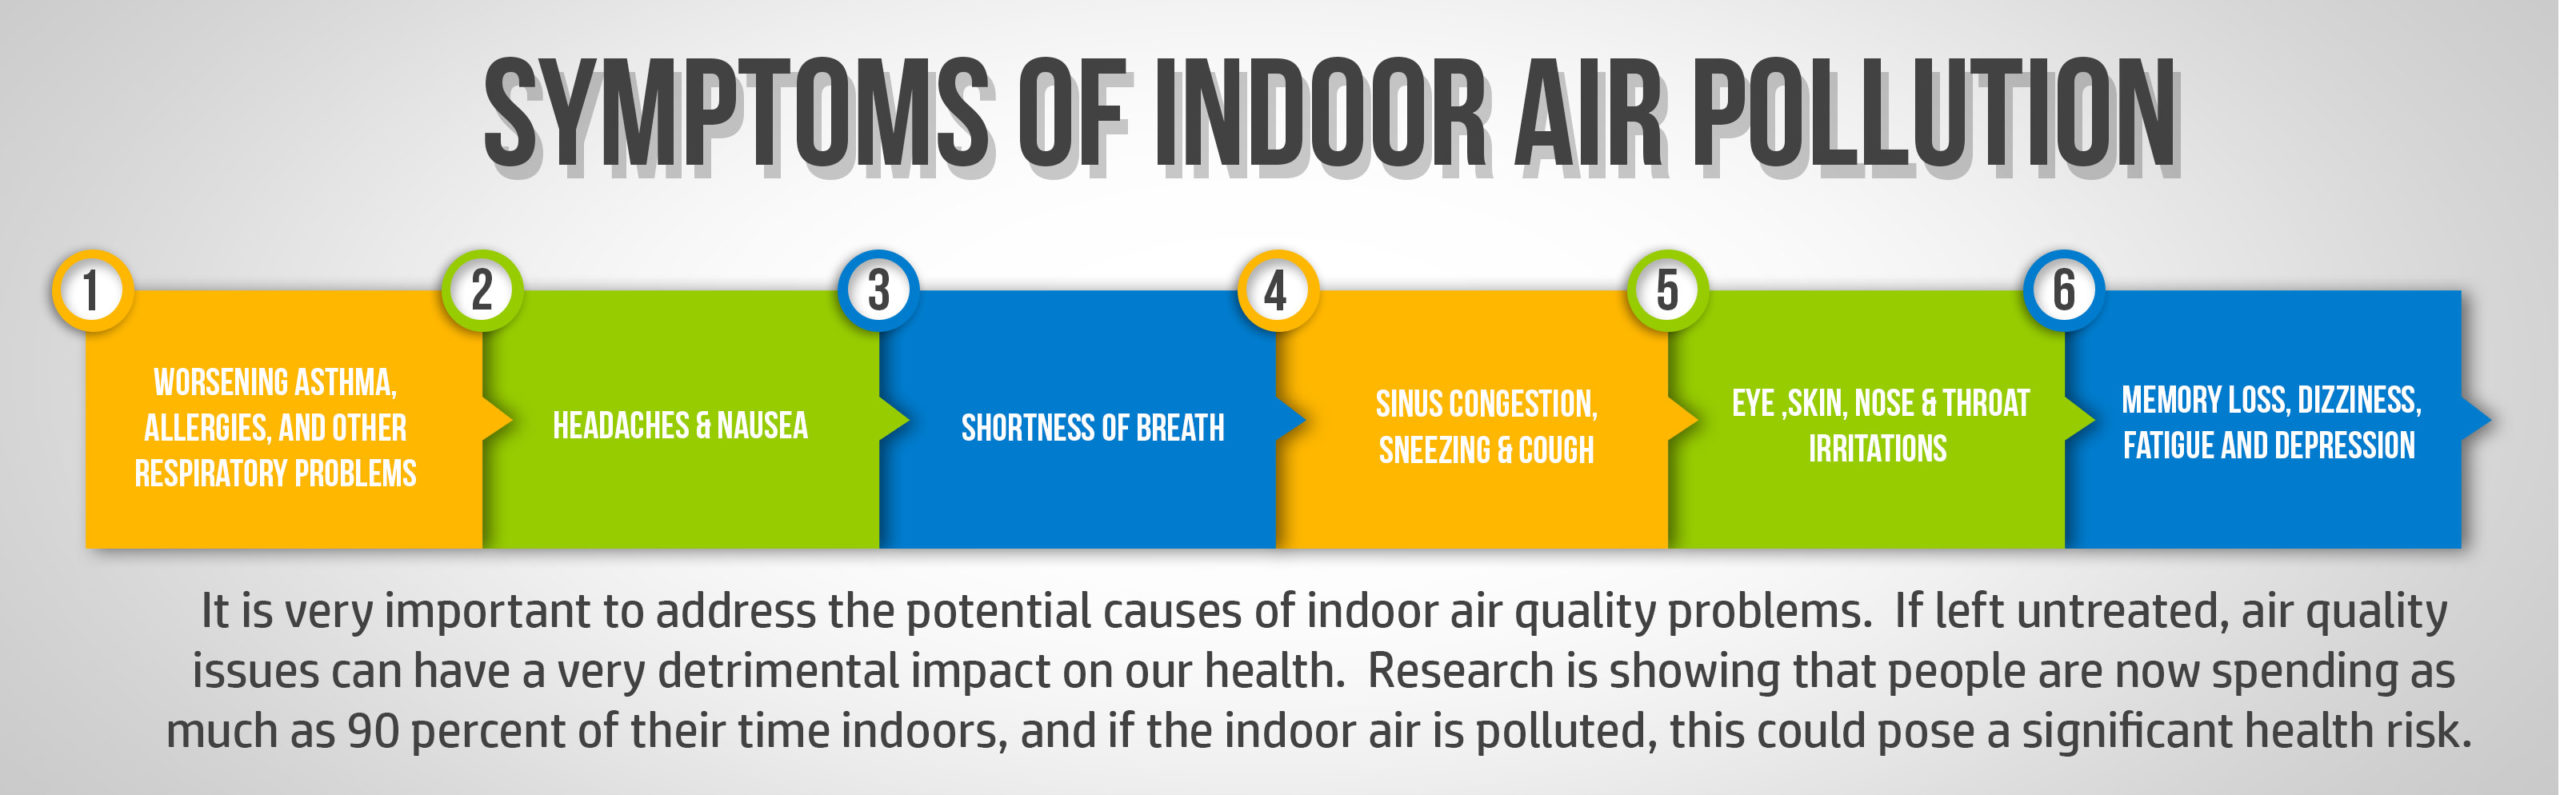 Symptoms of Indoor Air Pollution